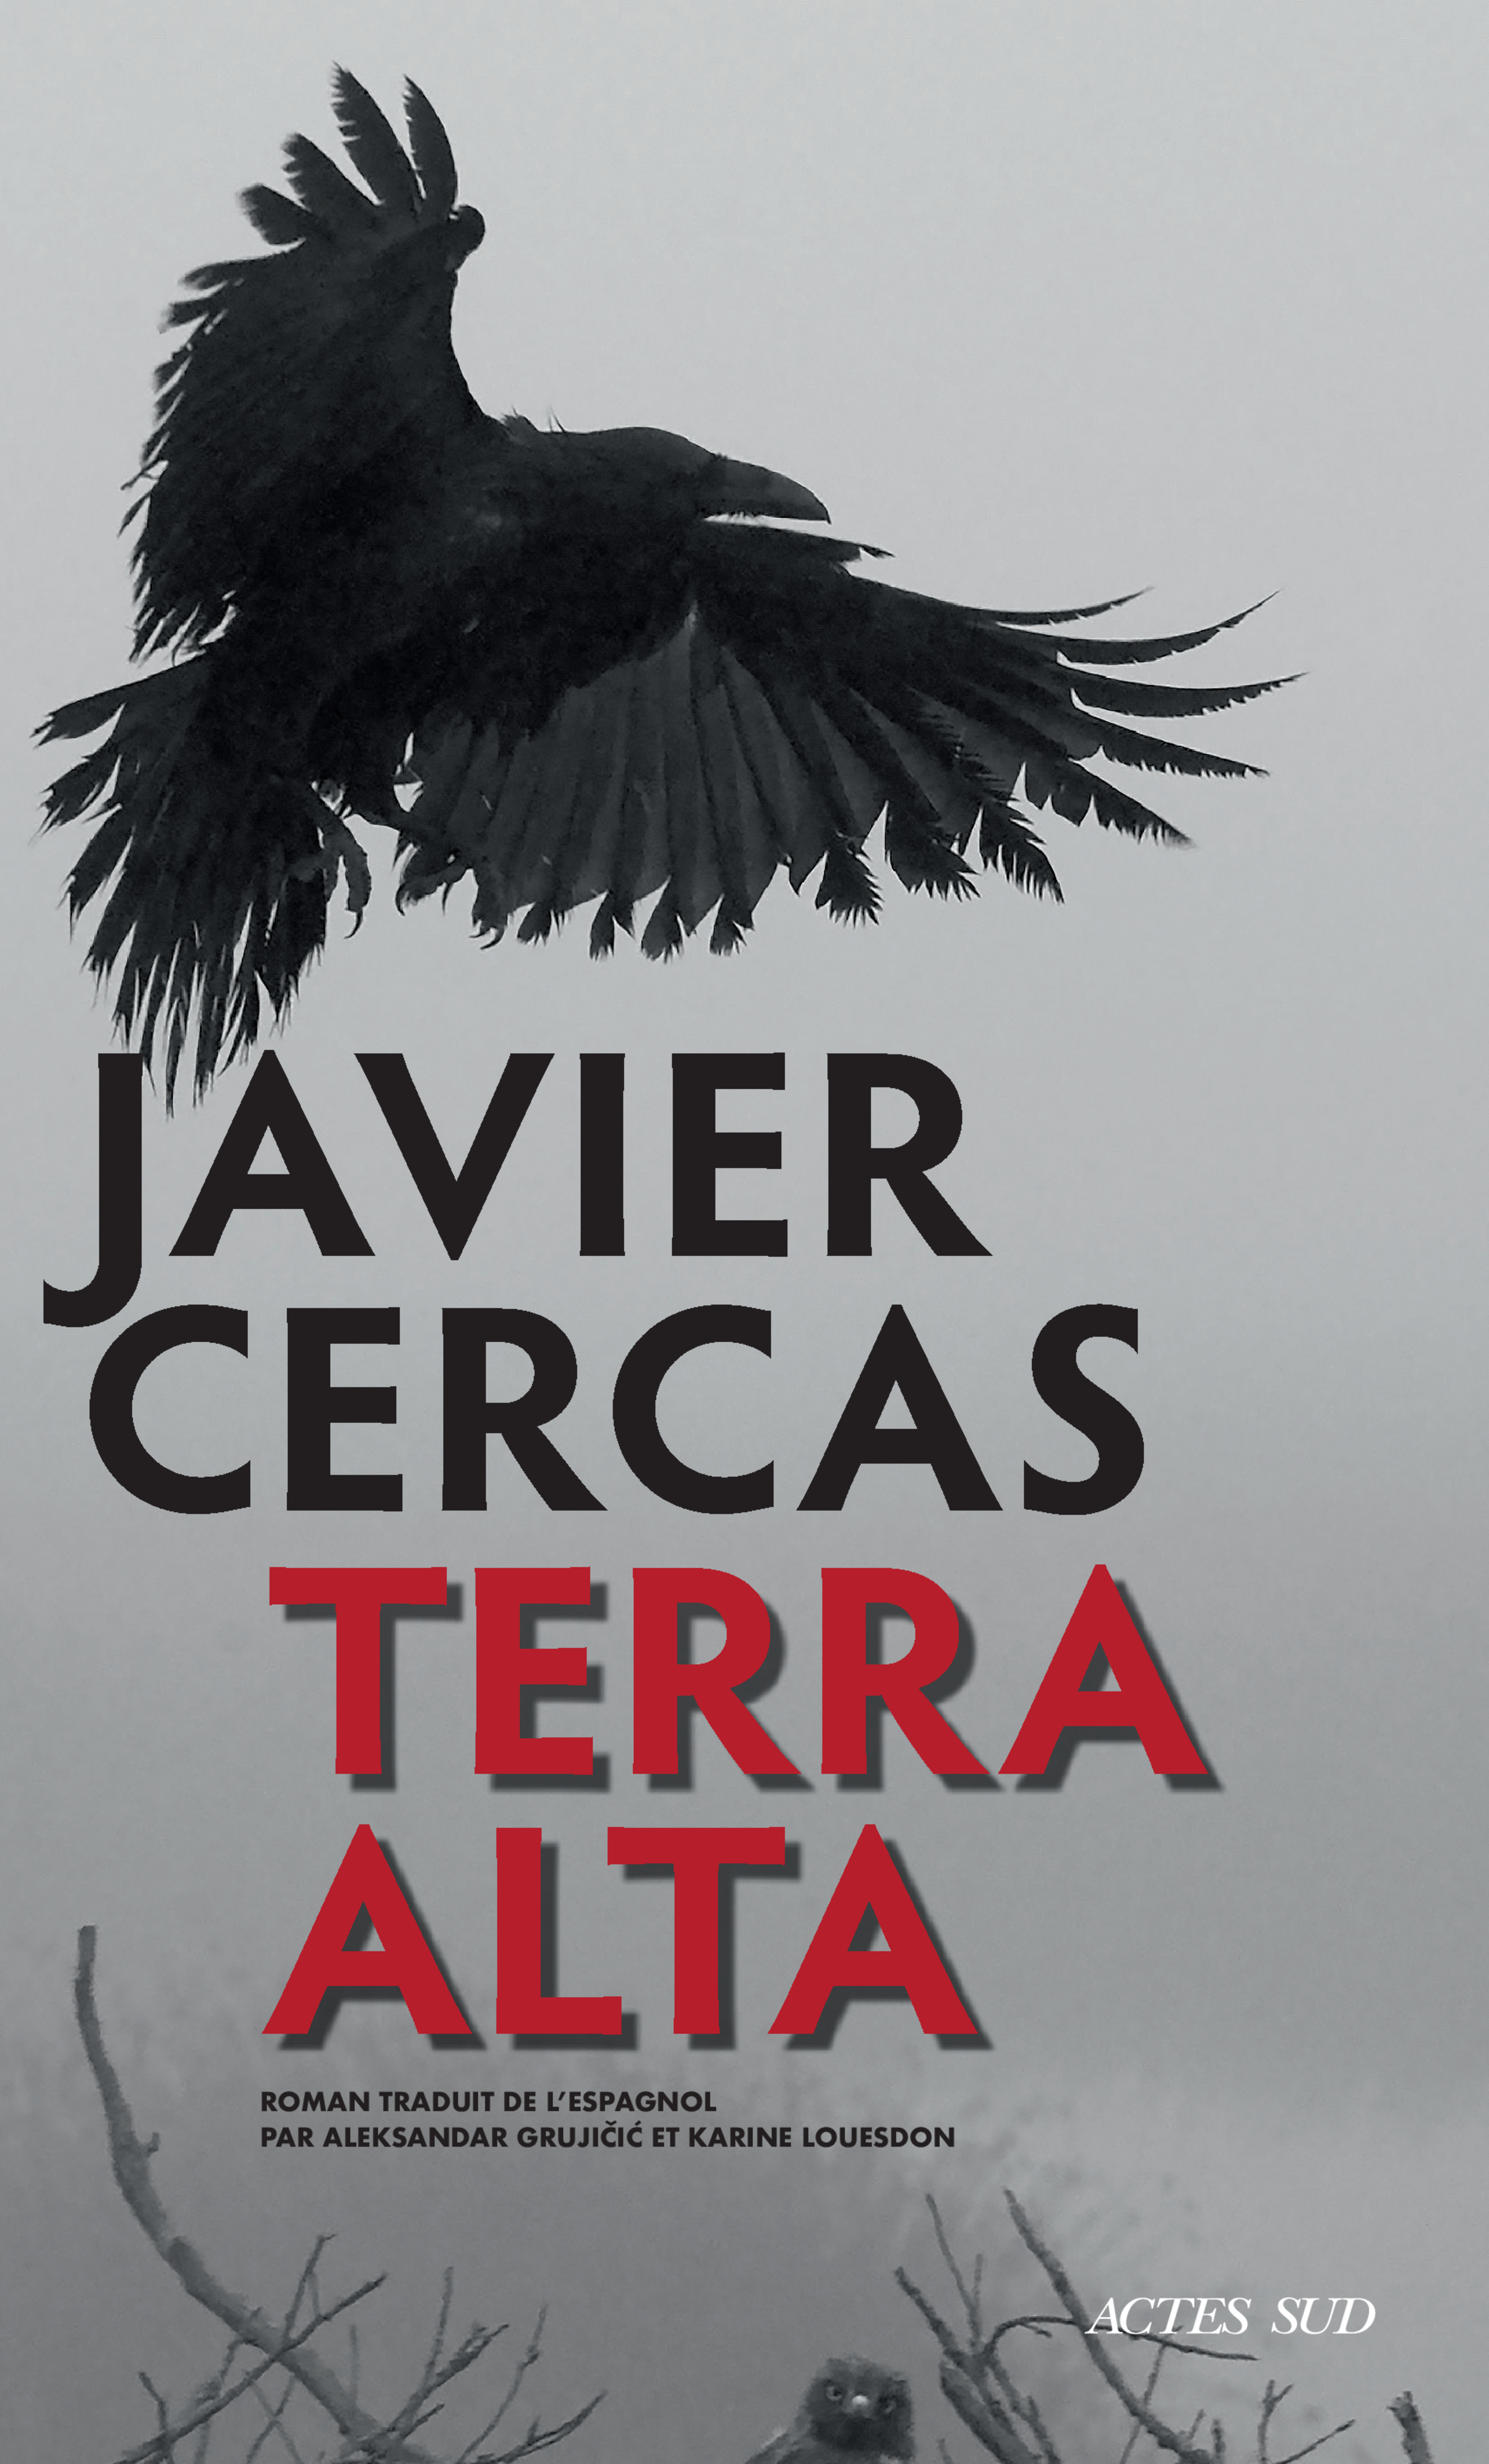 Afficher "Terra Alta"